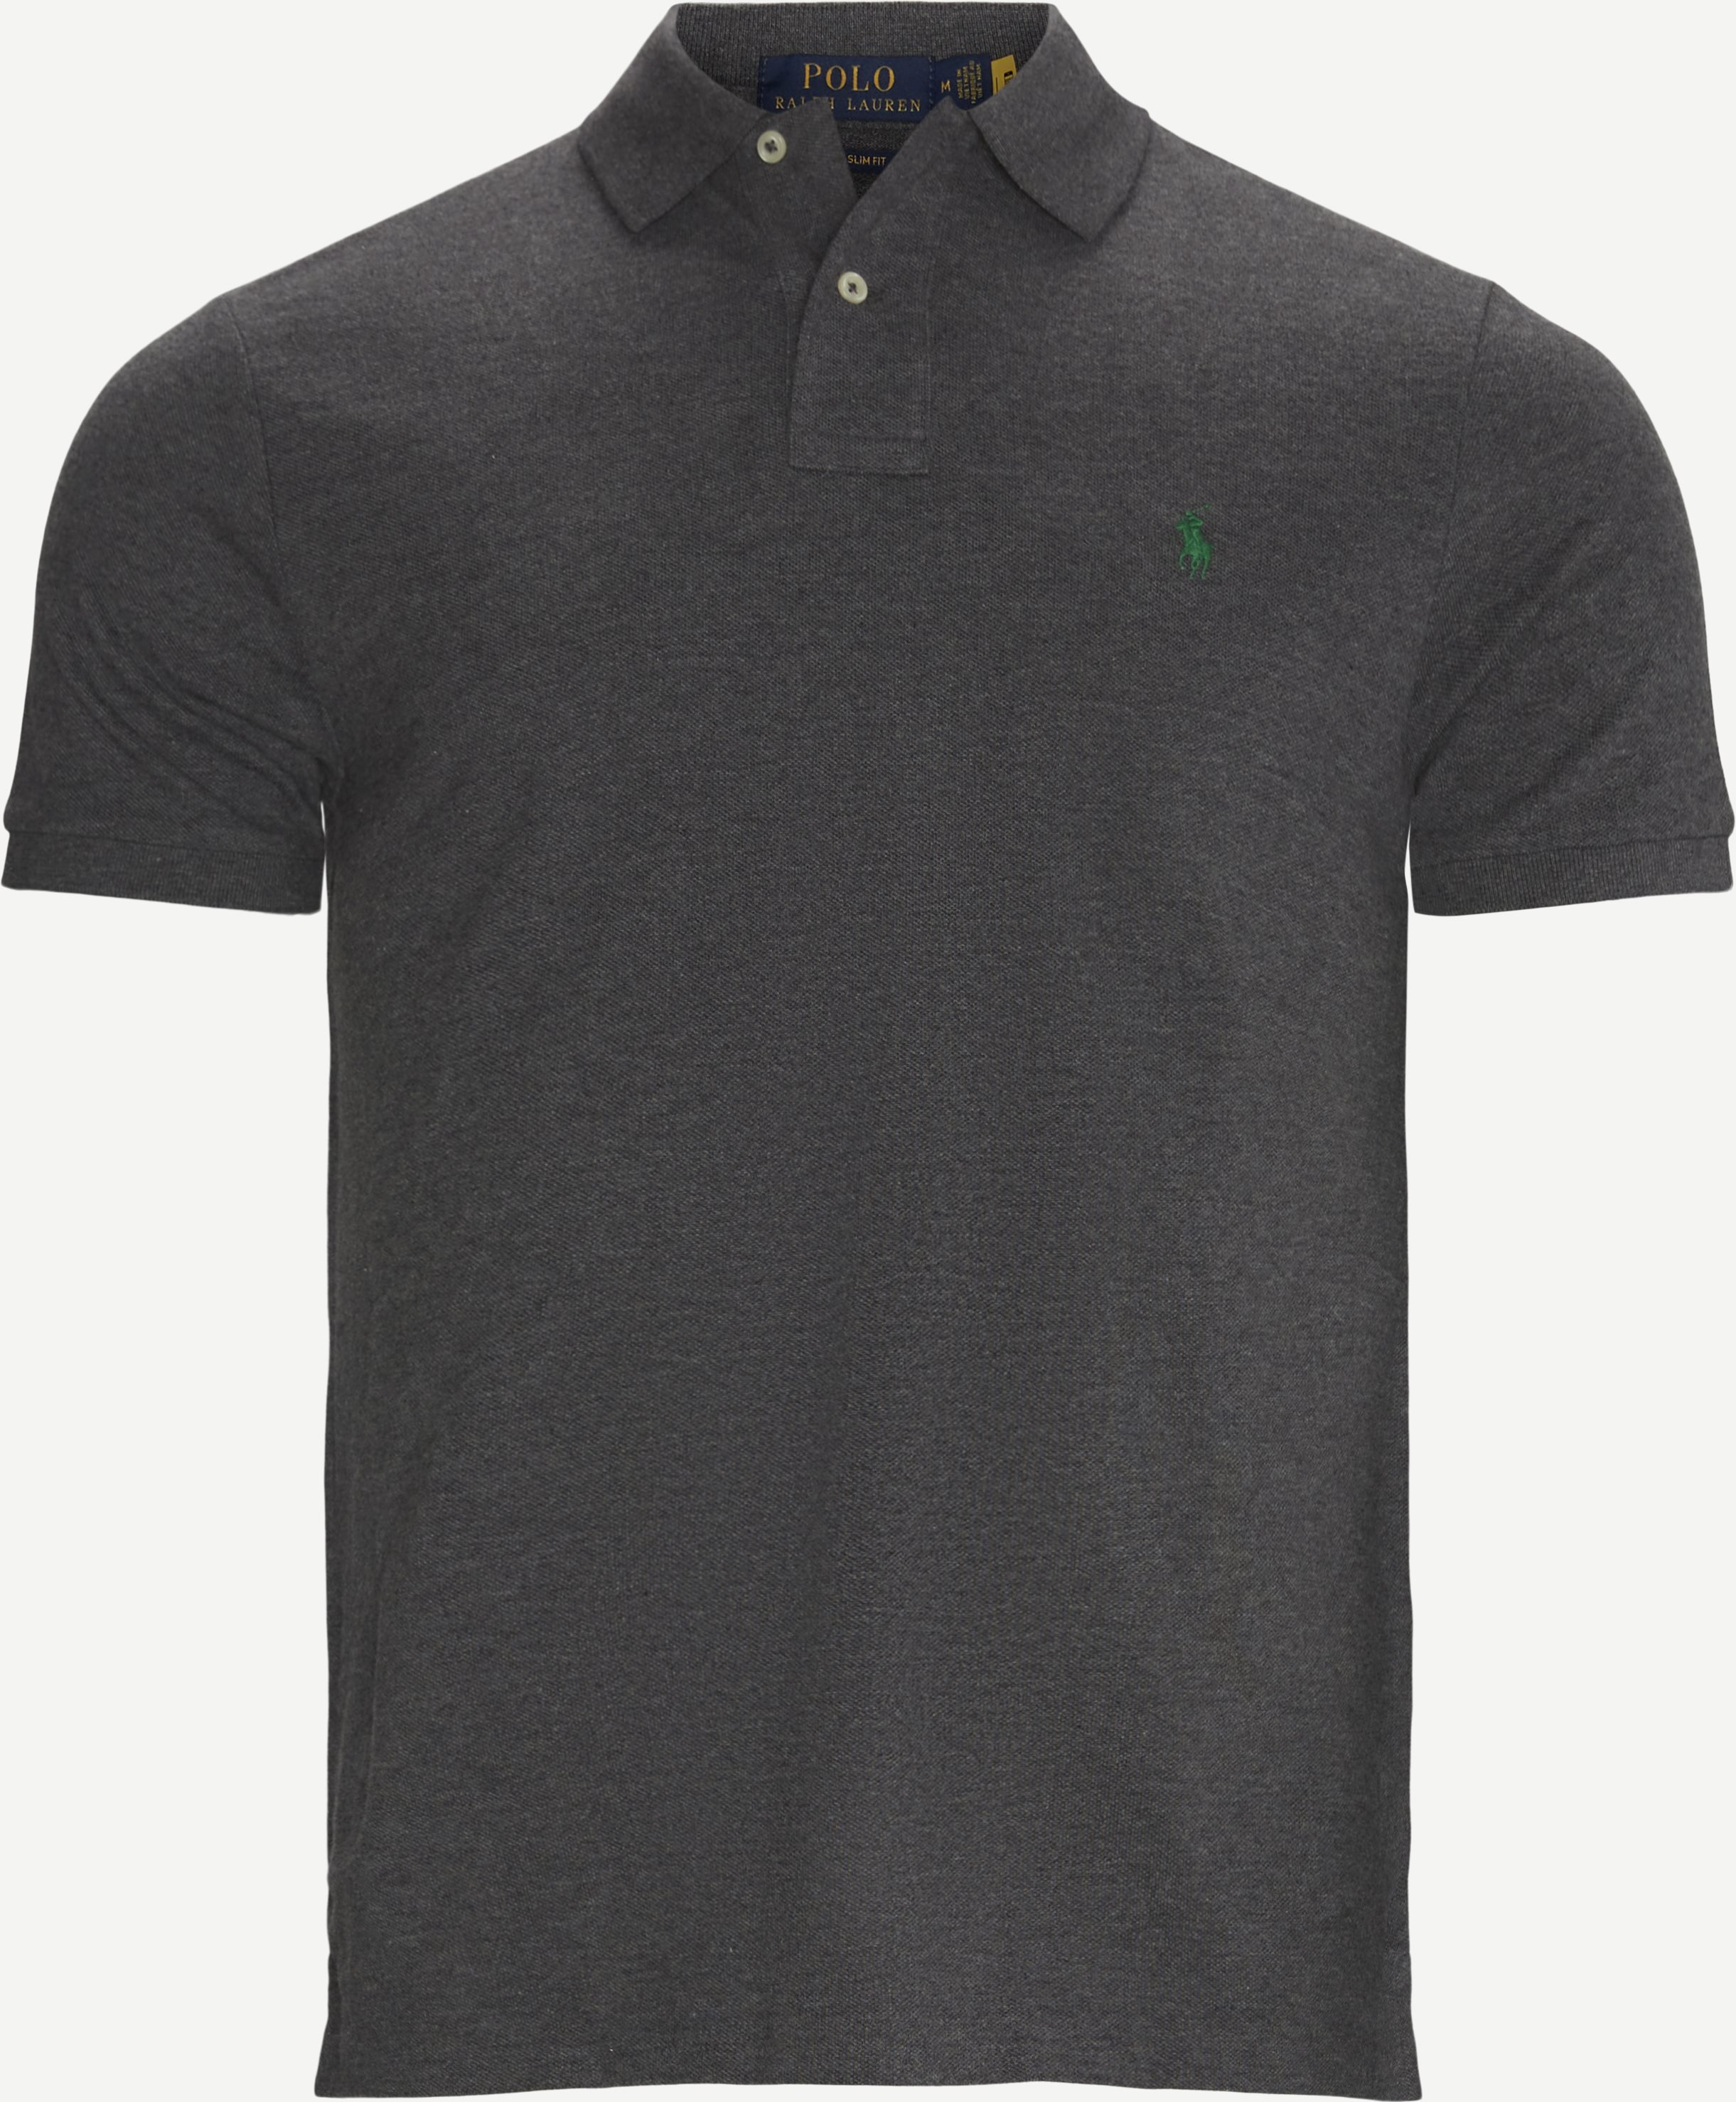 Polo T-shirt - T-shirts - Regular slim fit - Grey